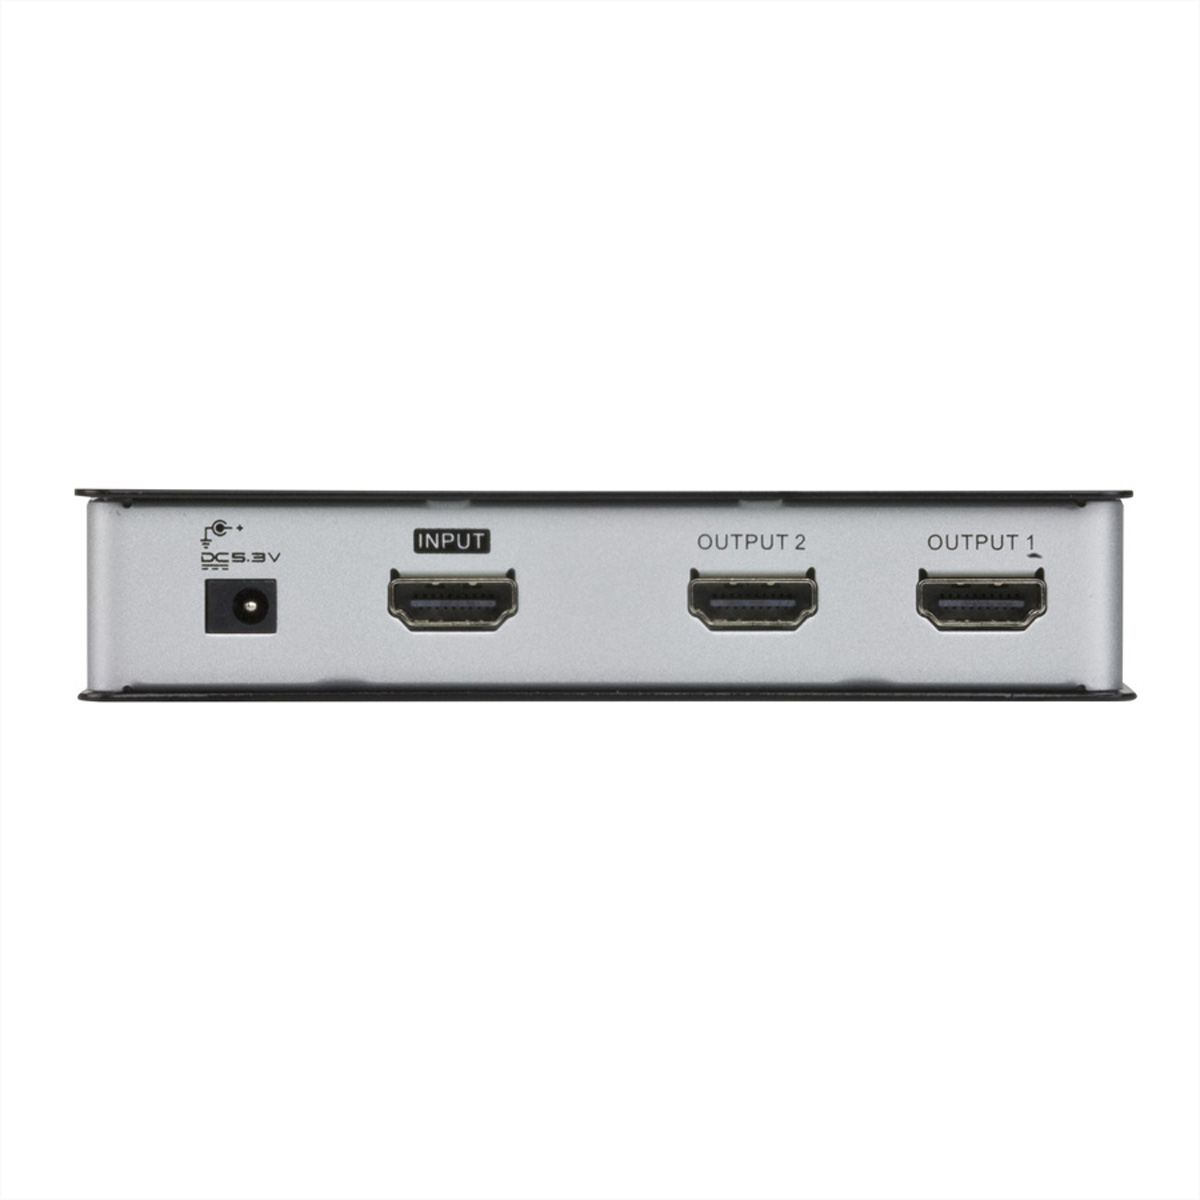 Ports HDMI-Video-Splitter 2 Video-Splitter, HighSpeed VS182A ATEN HDMI